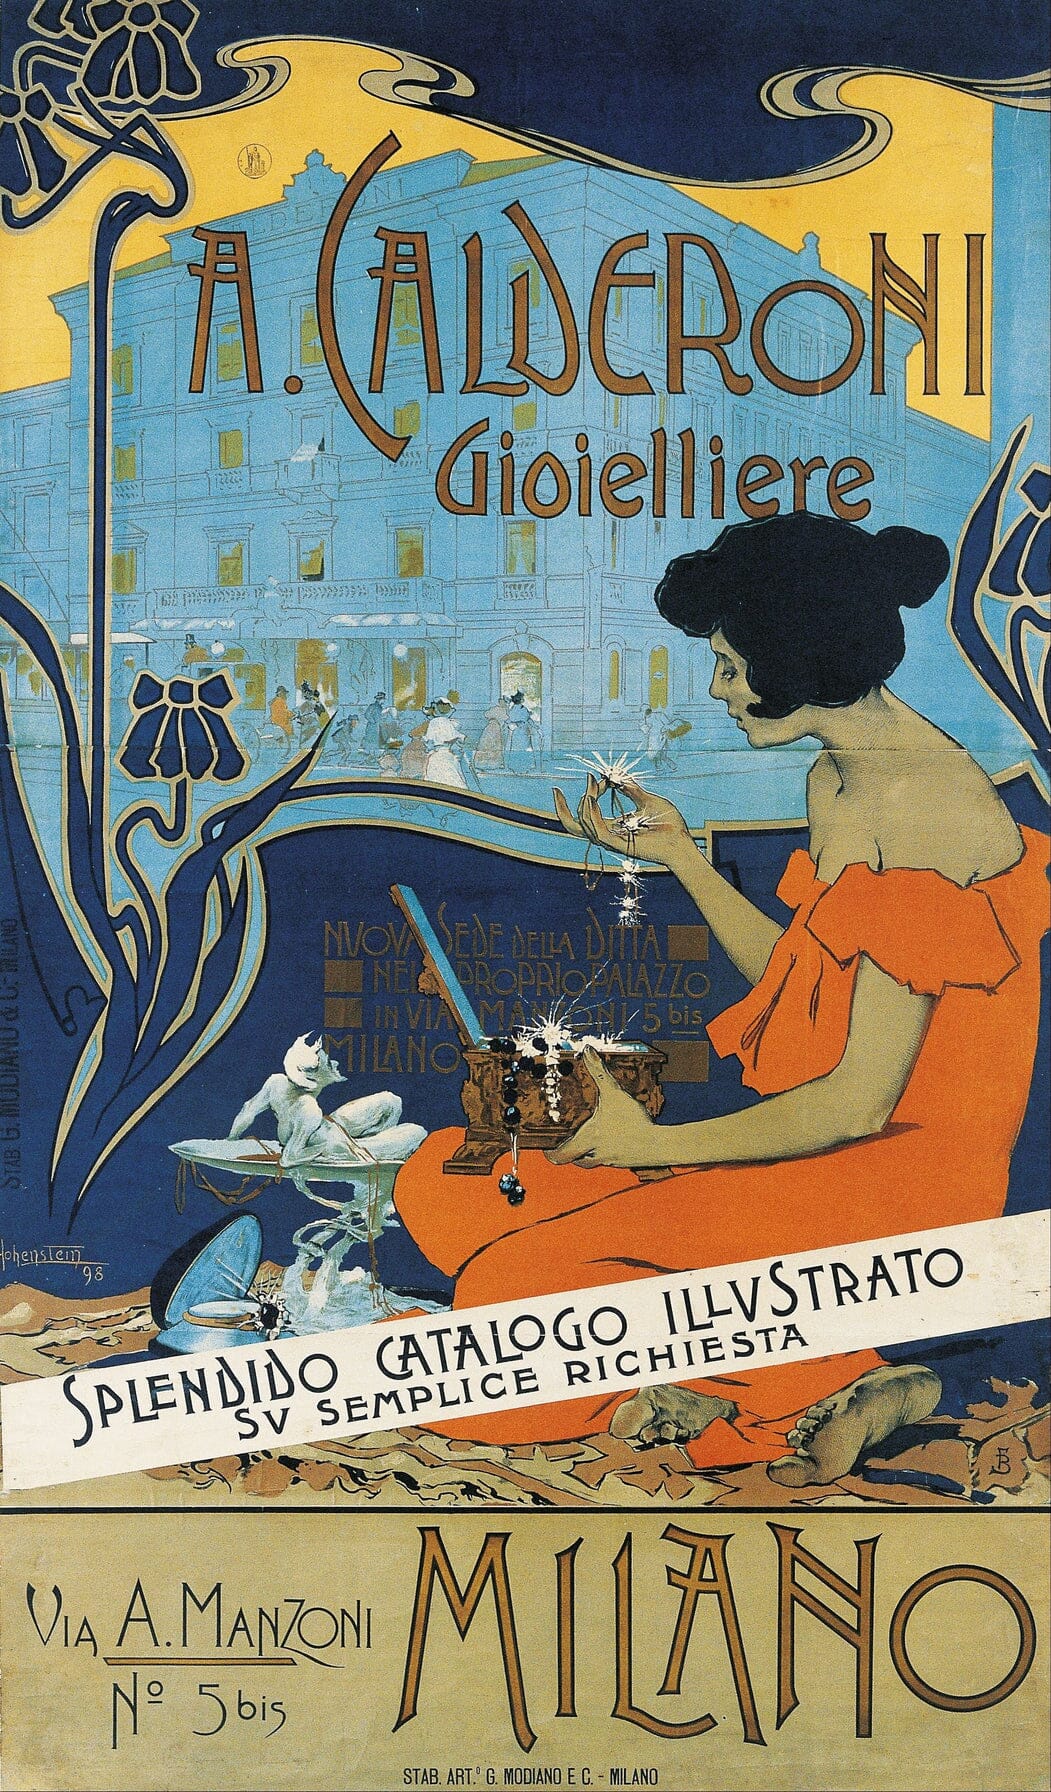 Calderoni Jeweller poster (Milan, 1890s) | Art nouveau prints | Adolfo Hohenstein Posters, Prints, & Visual Artwork The Trumpet Shop   